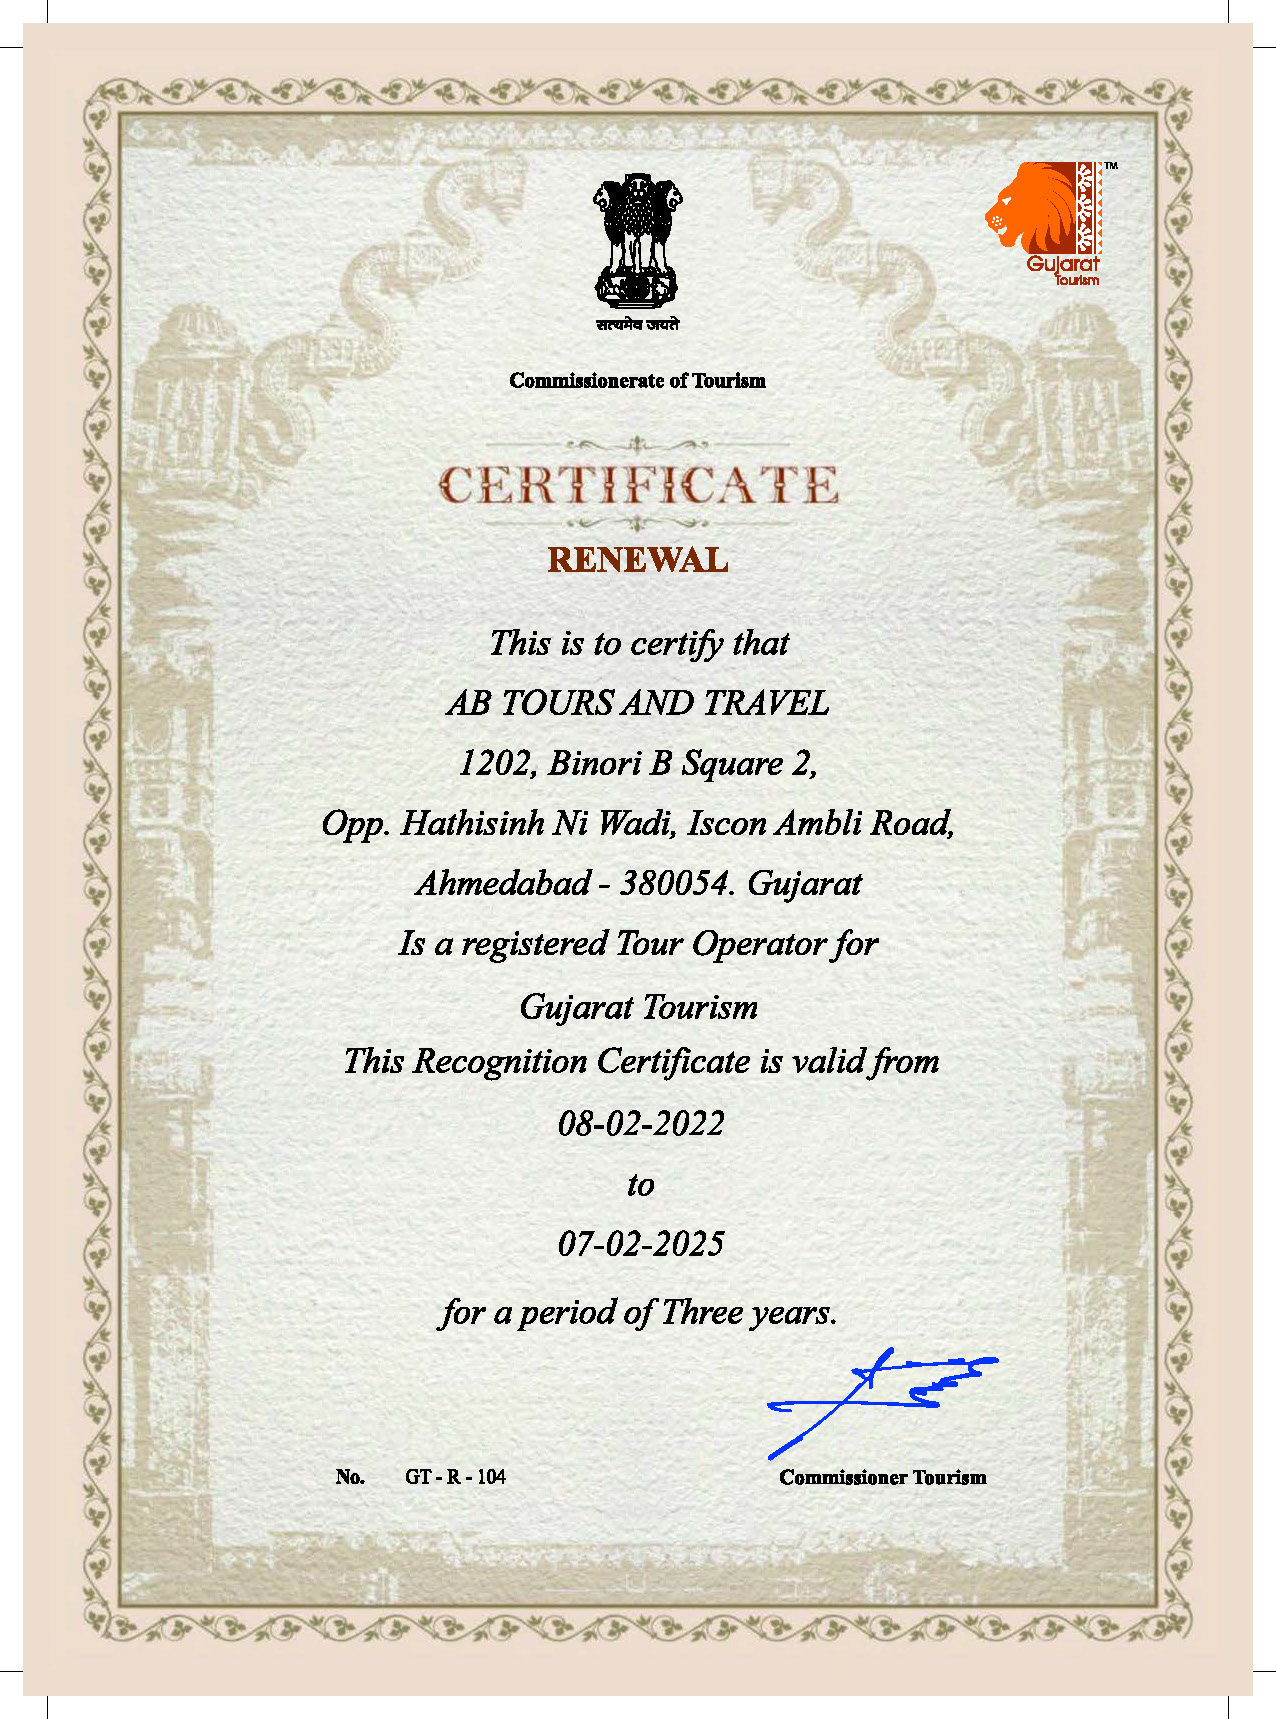 Gujarat Tourism - Recognition Certificate